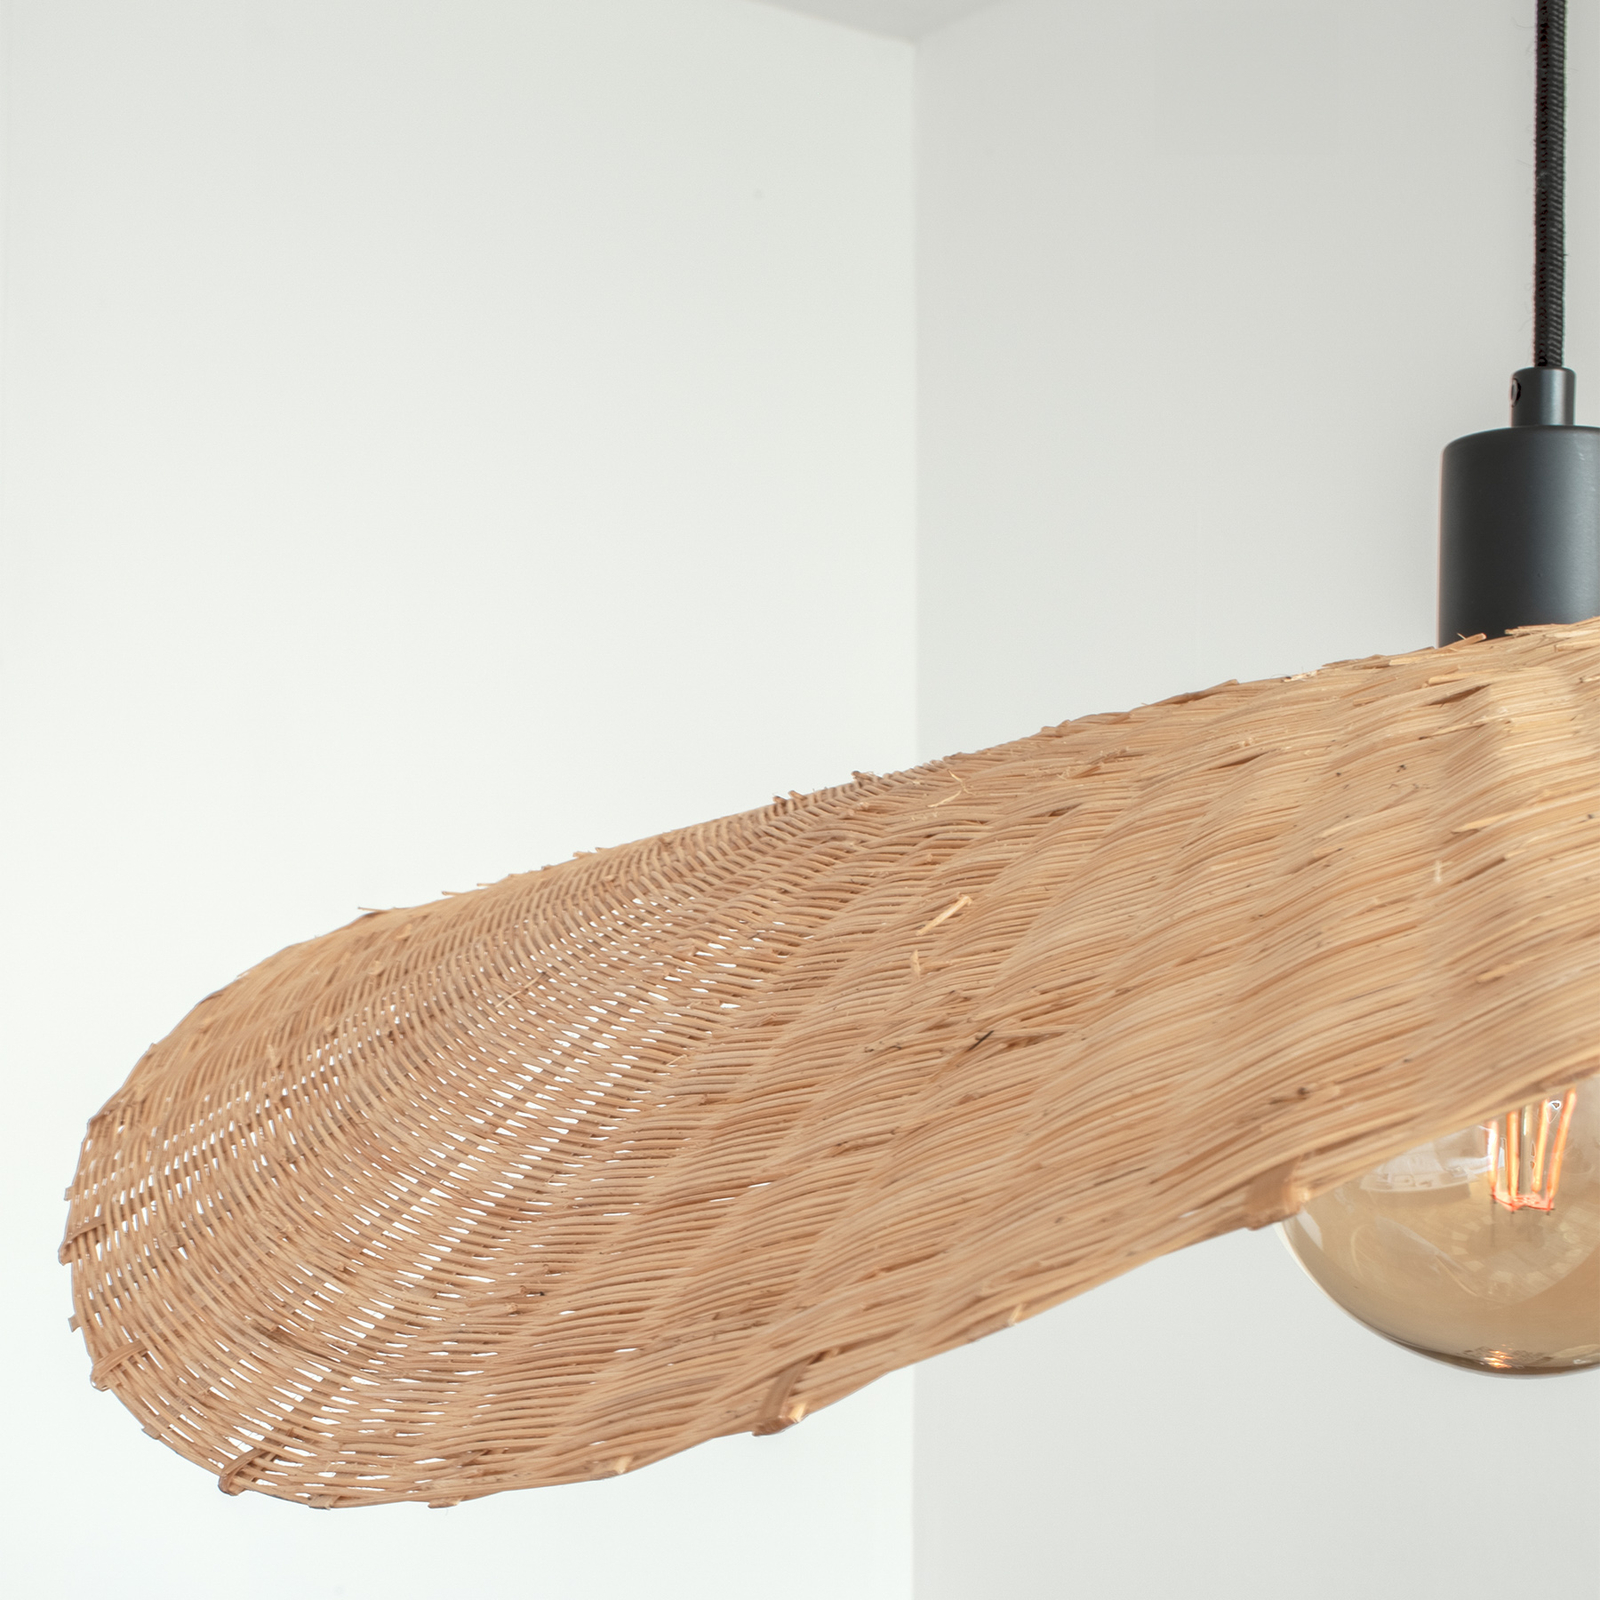 Rayo pendant light made of bamboo, natural